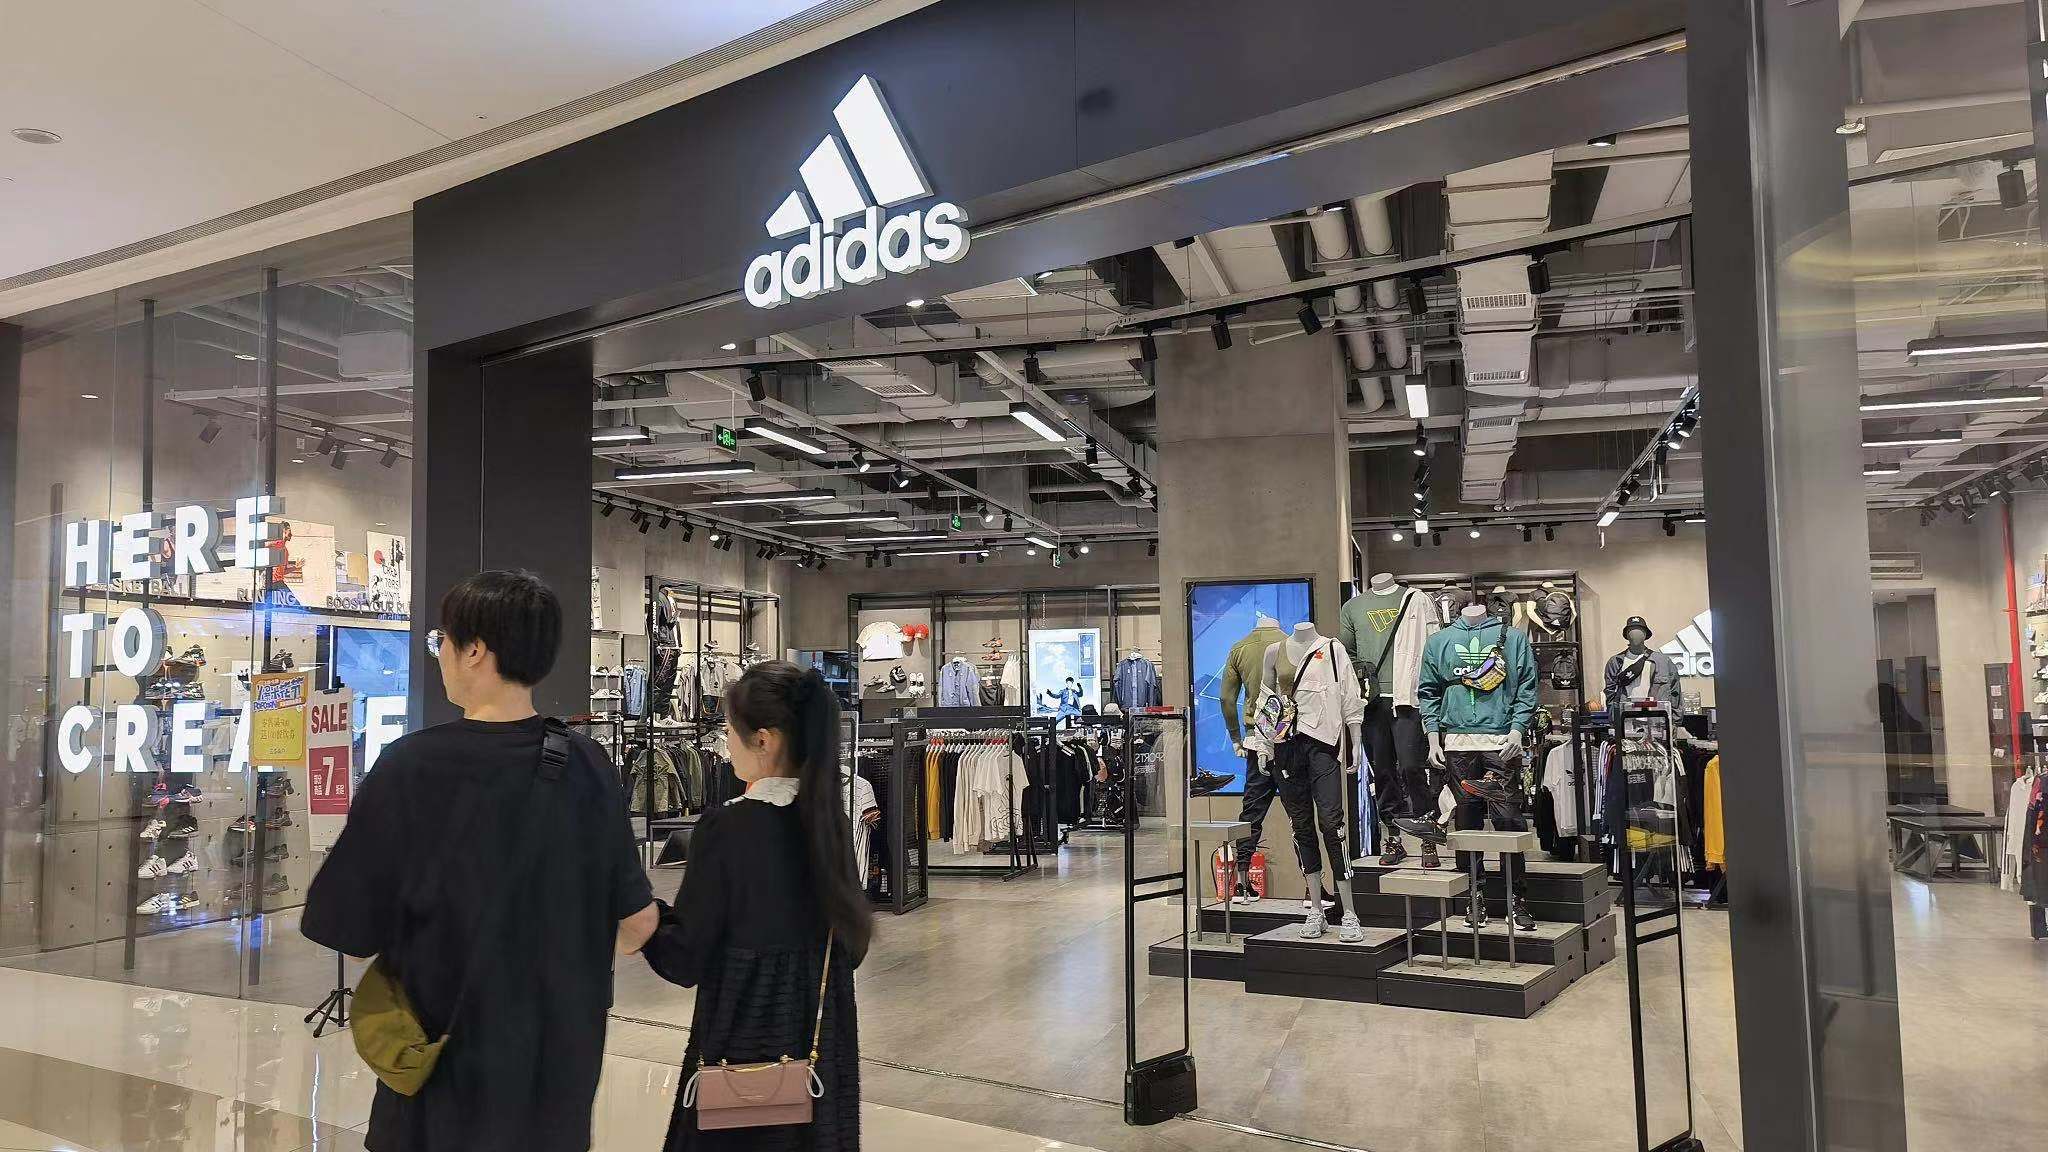 Vendedor Morgue filete Adidas, Nike web sales in China plunge amid boycott - CGTN